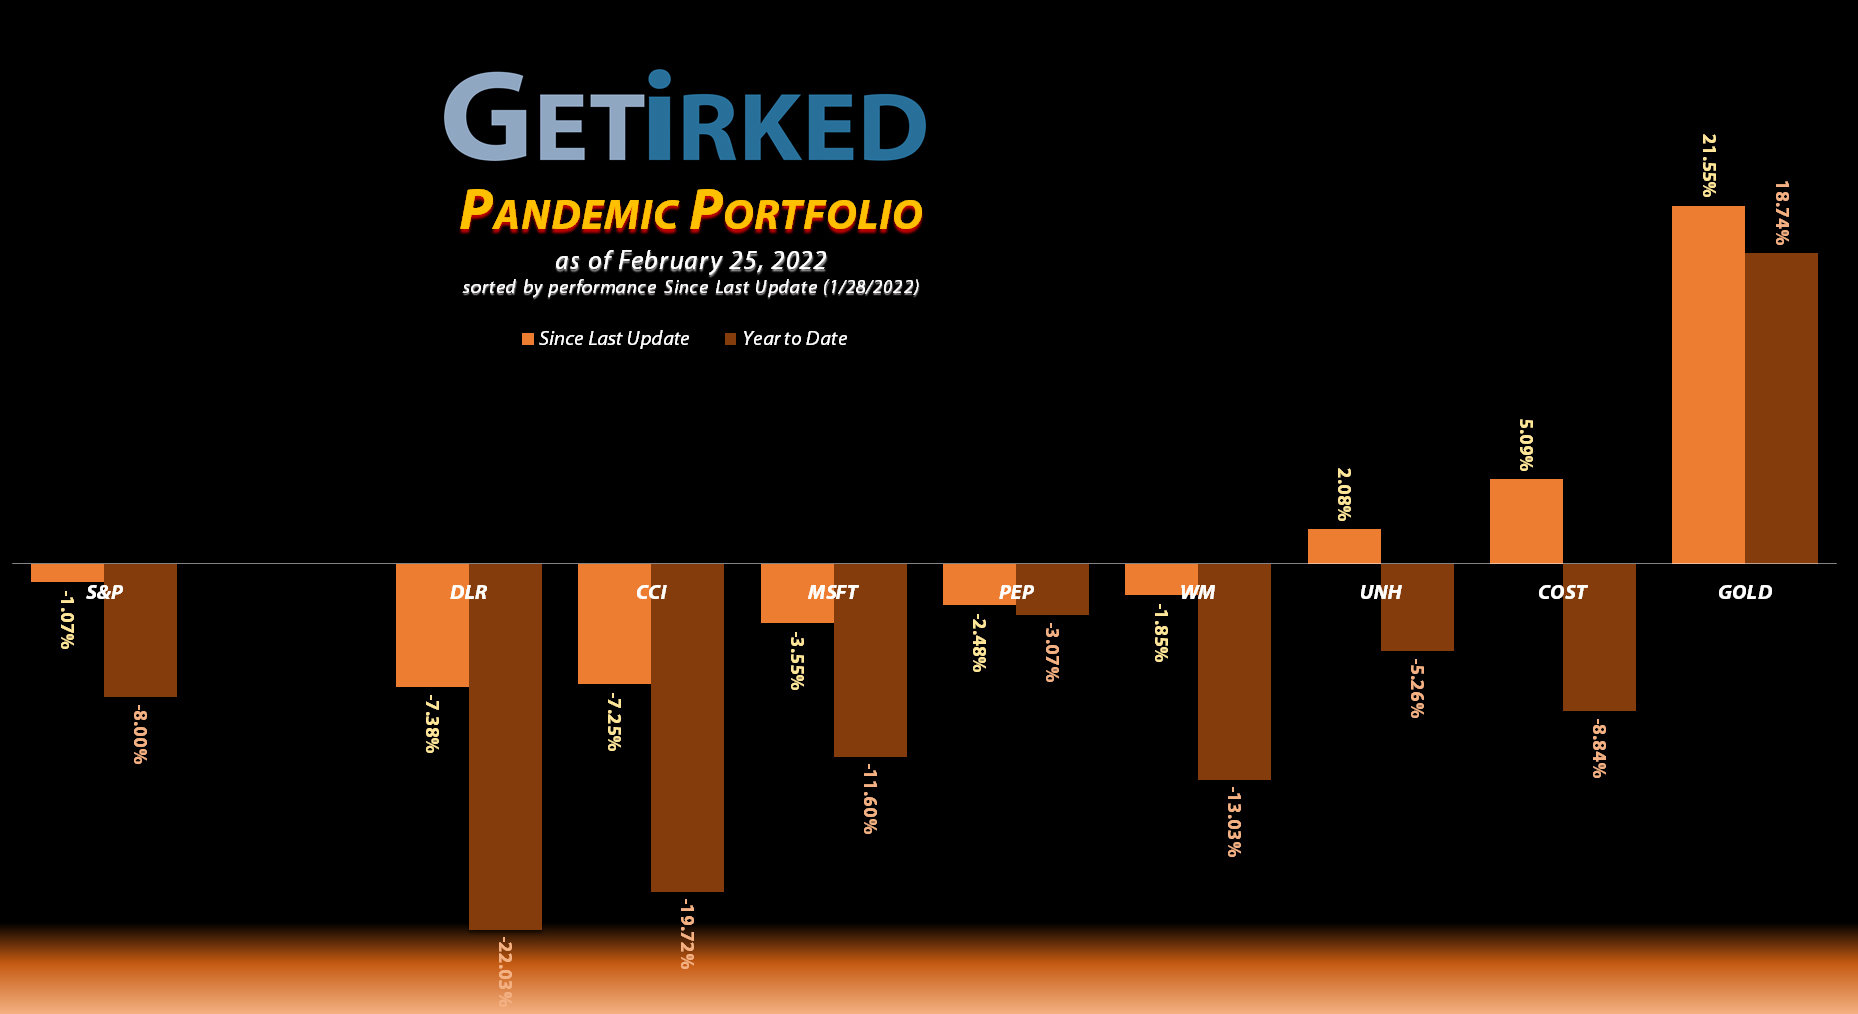 Get Irked - Pandemic Portfolio - February 25, 2022